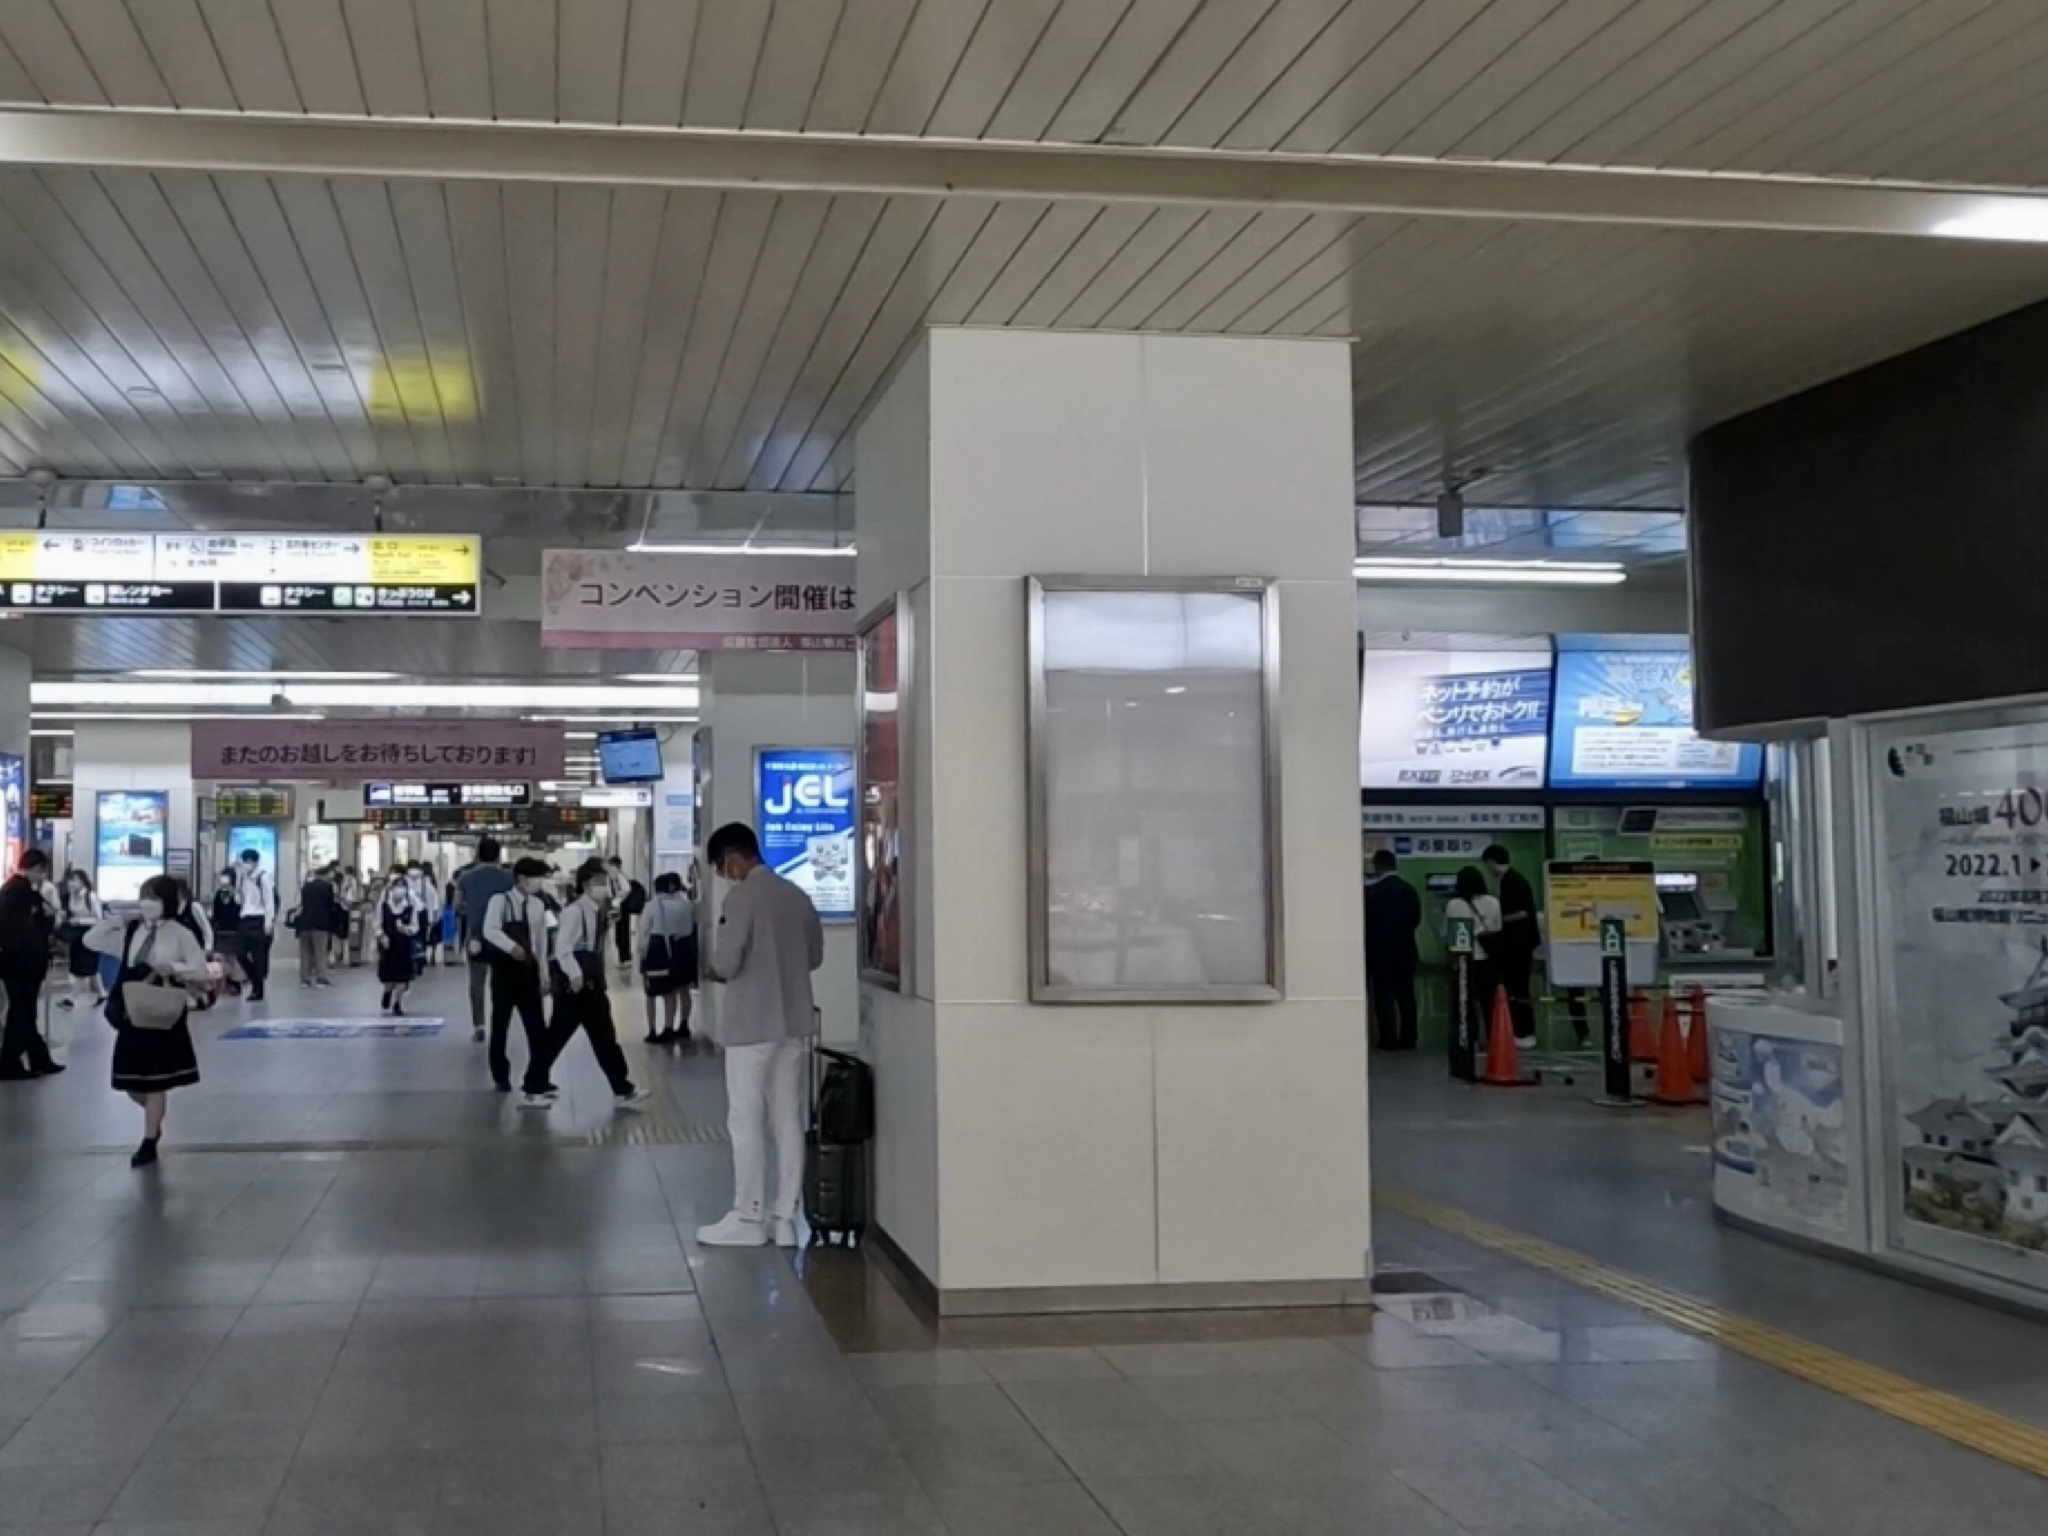 JR福山駅-電照広告のご案内 イメージ画像